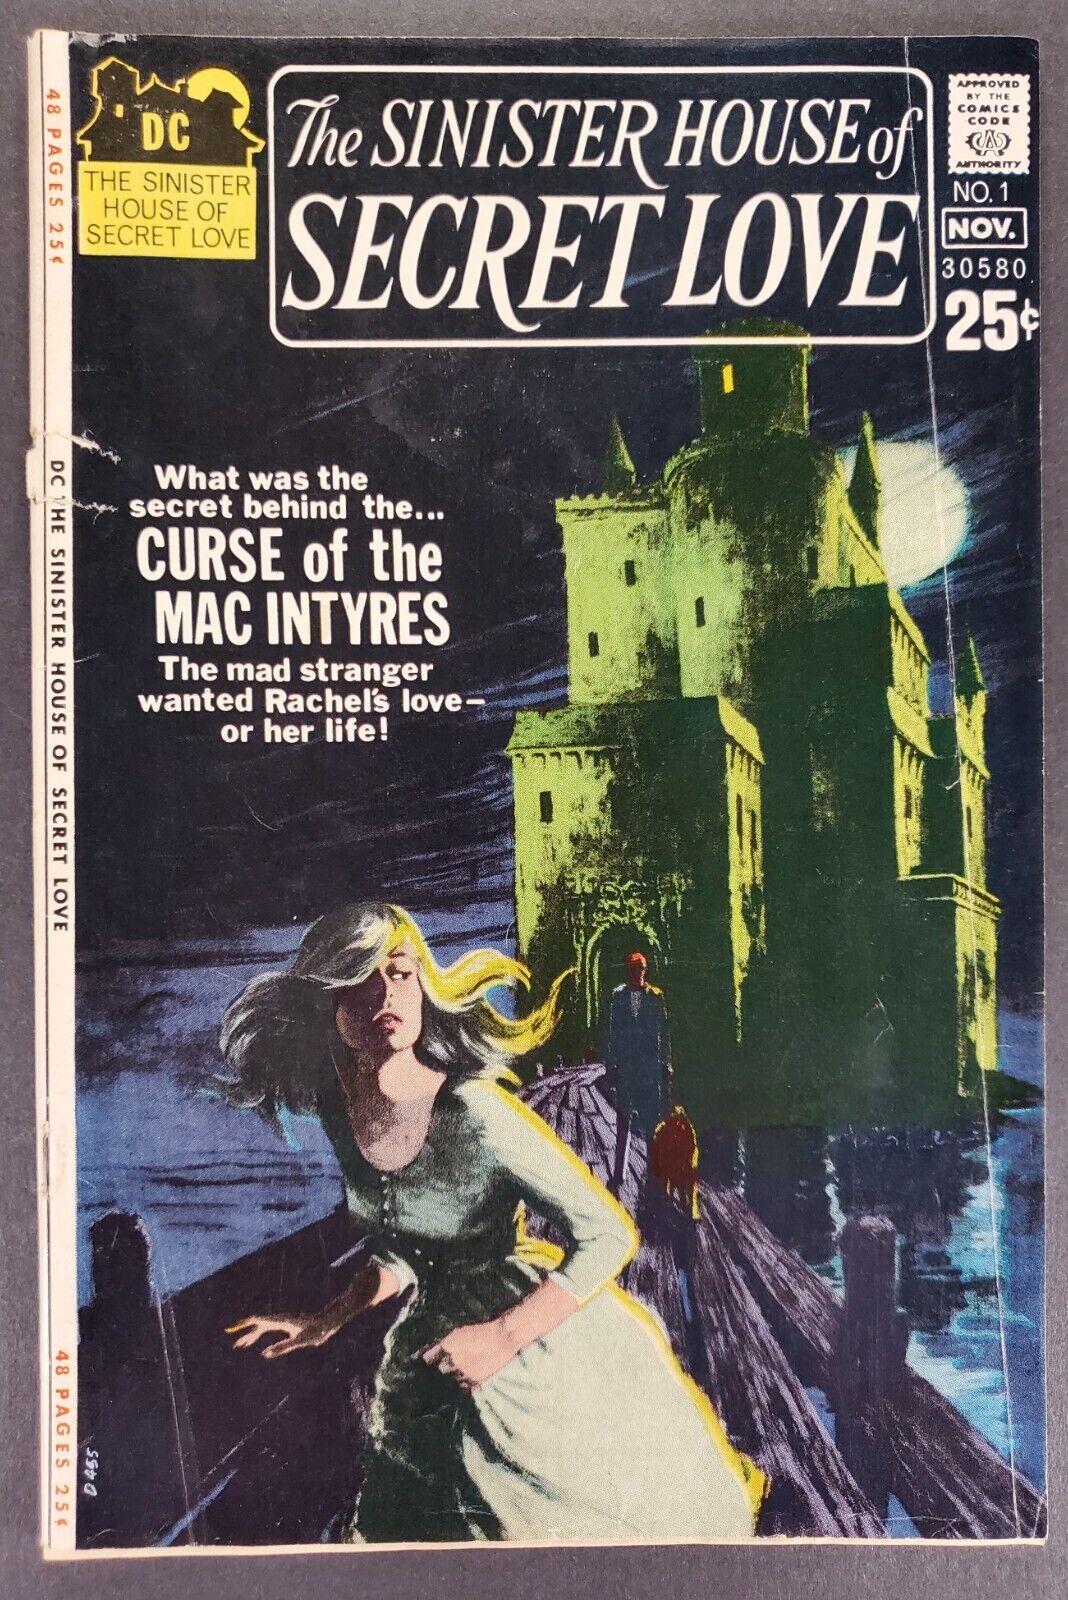 Sinister House of Secret Love #1 DC Comics 1971